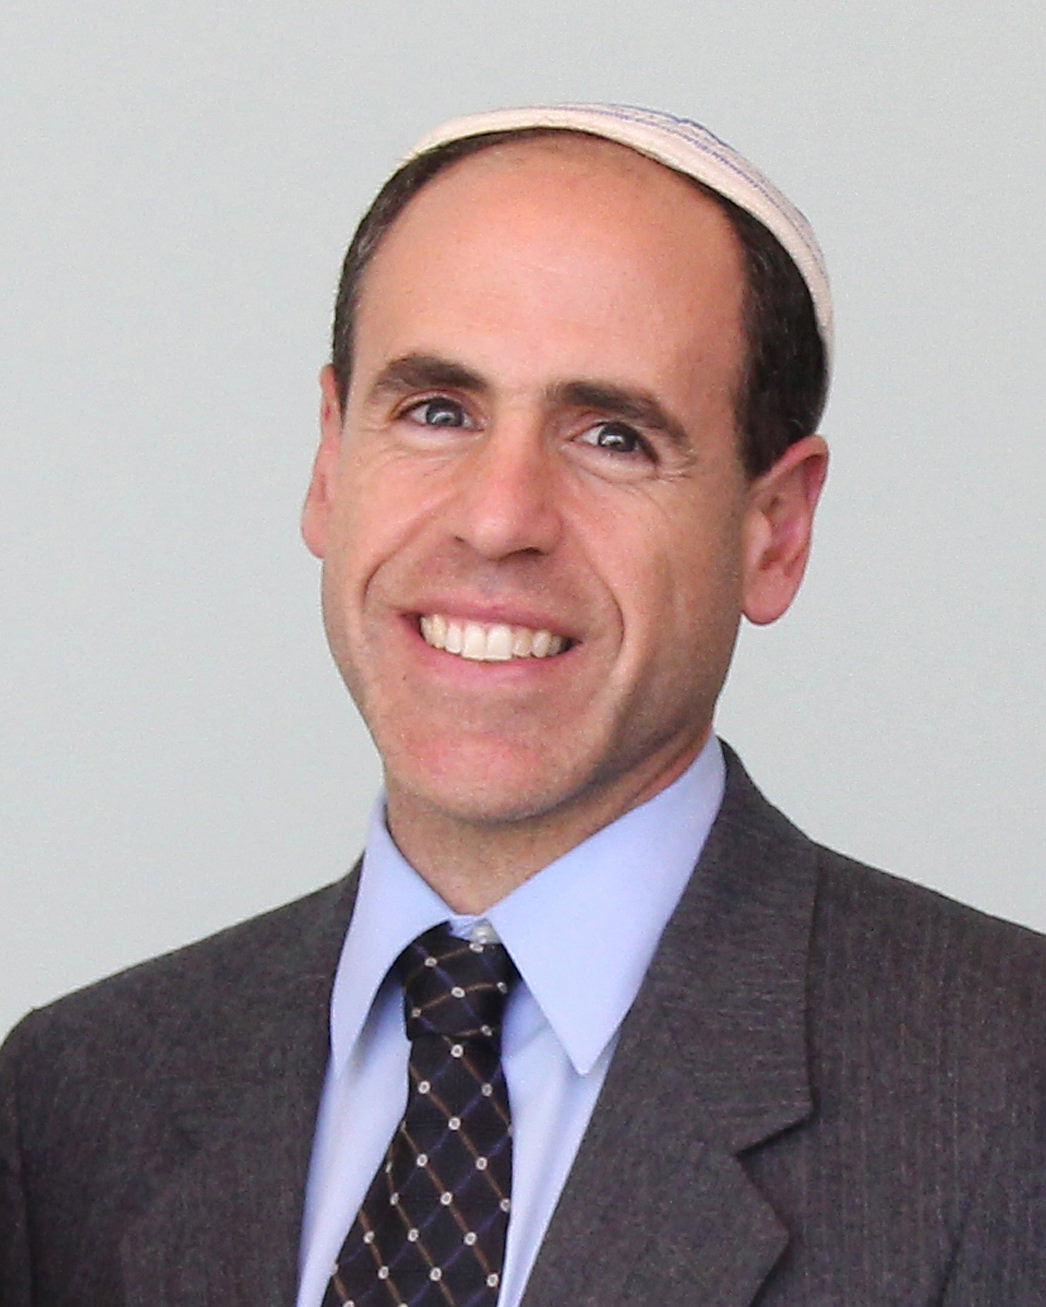 Rabbi Berman